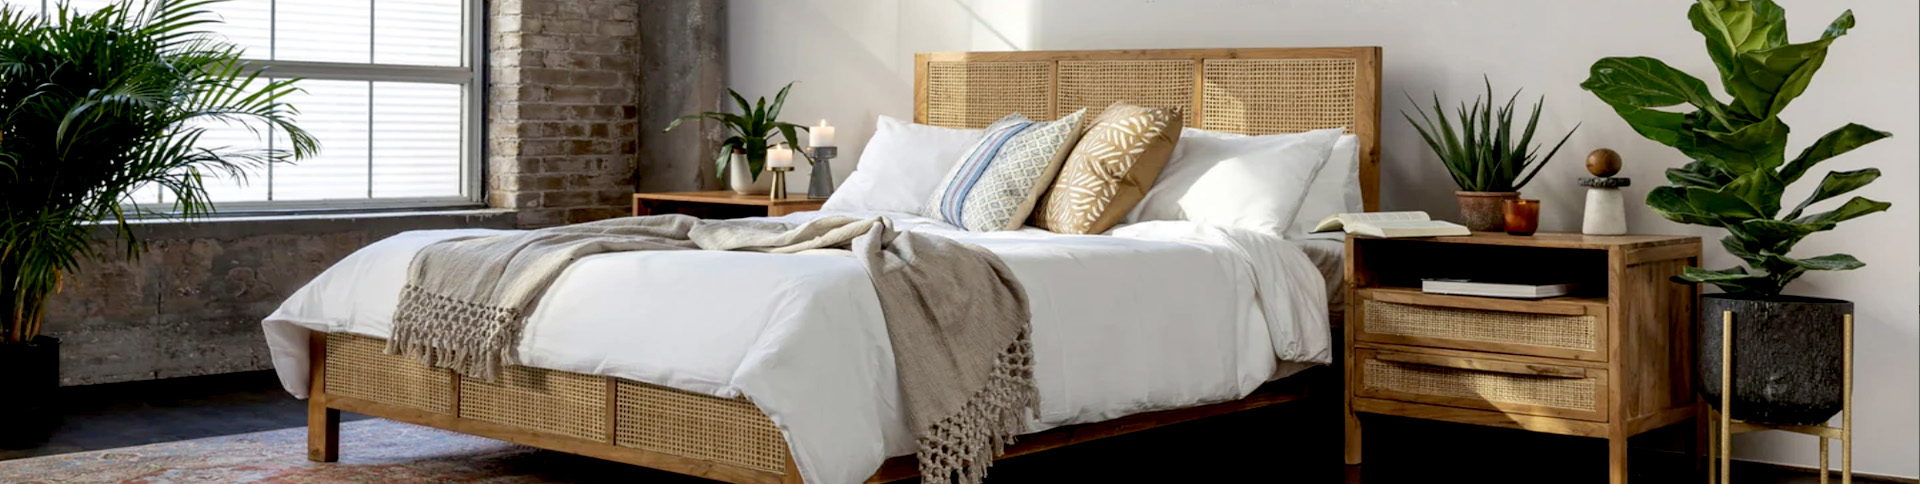 Bedroom Furniture You'll Love!